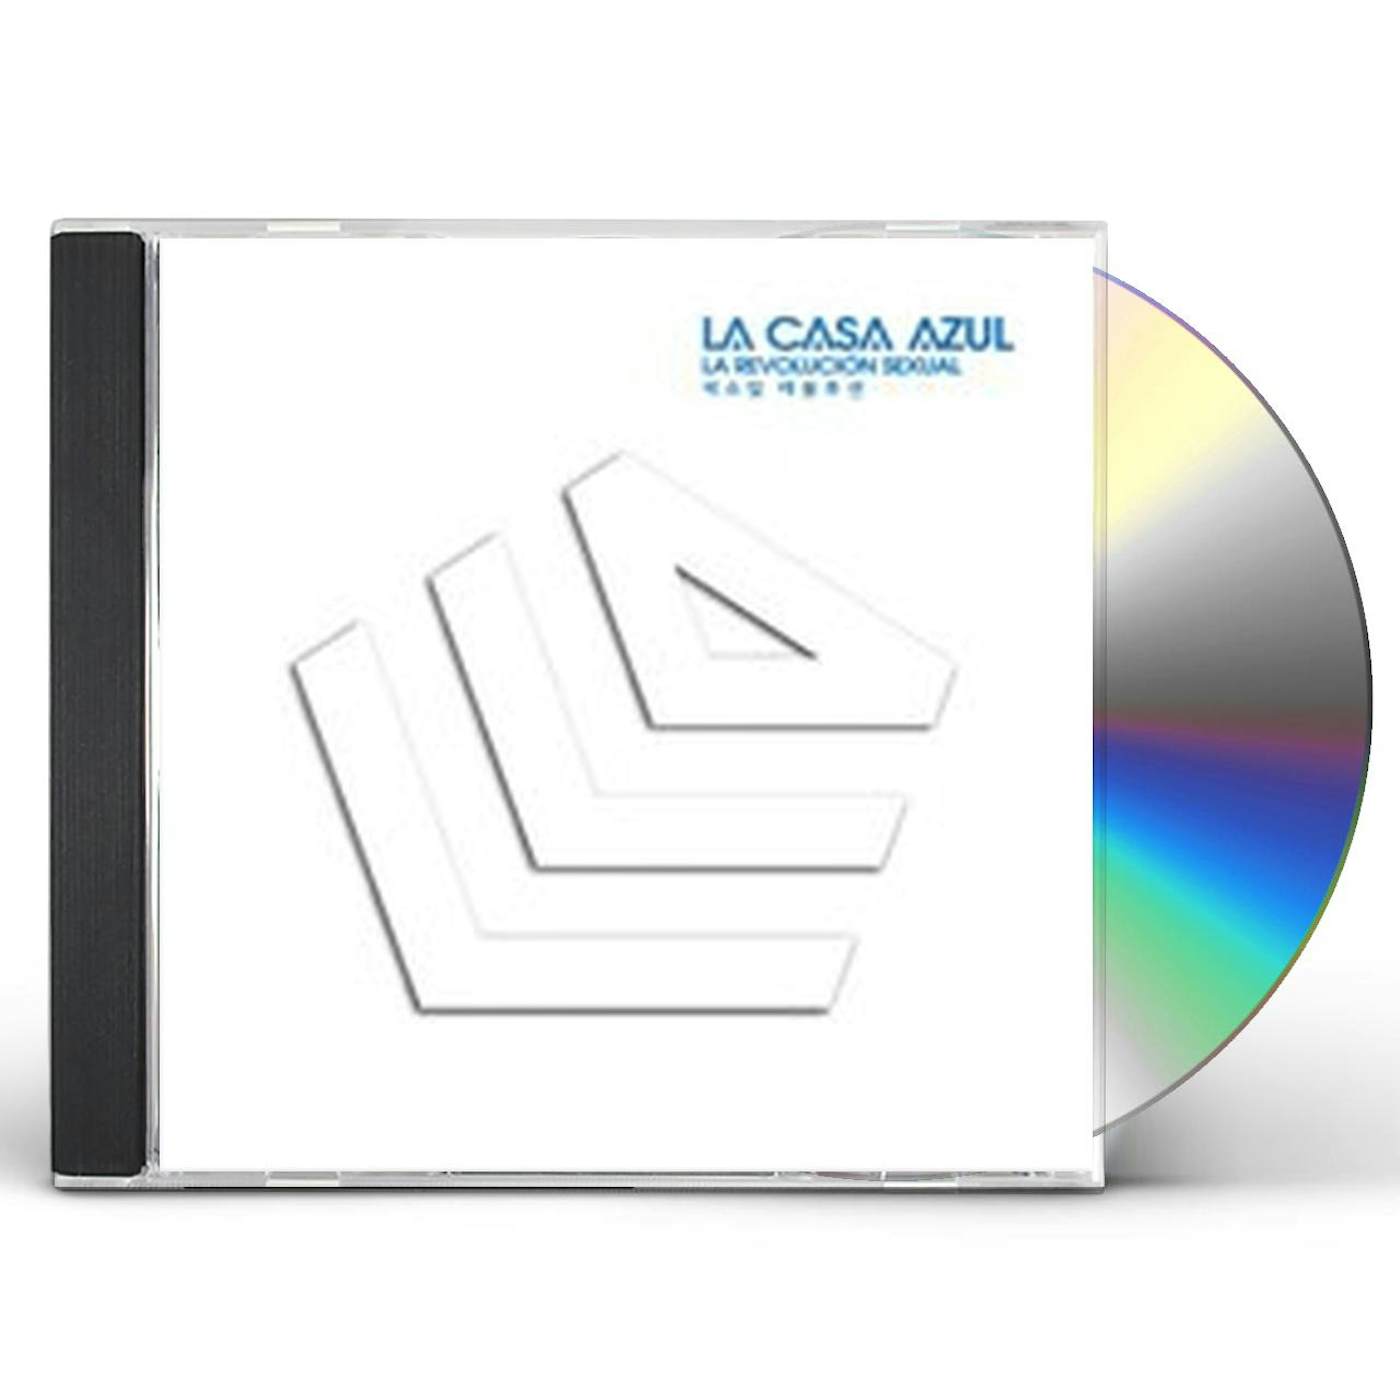 La Casa Azul LA REVOLUCION SEXUAL CD